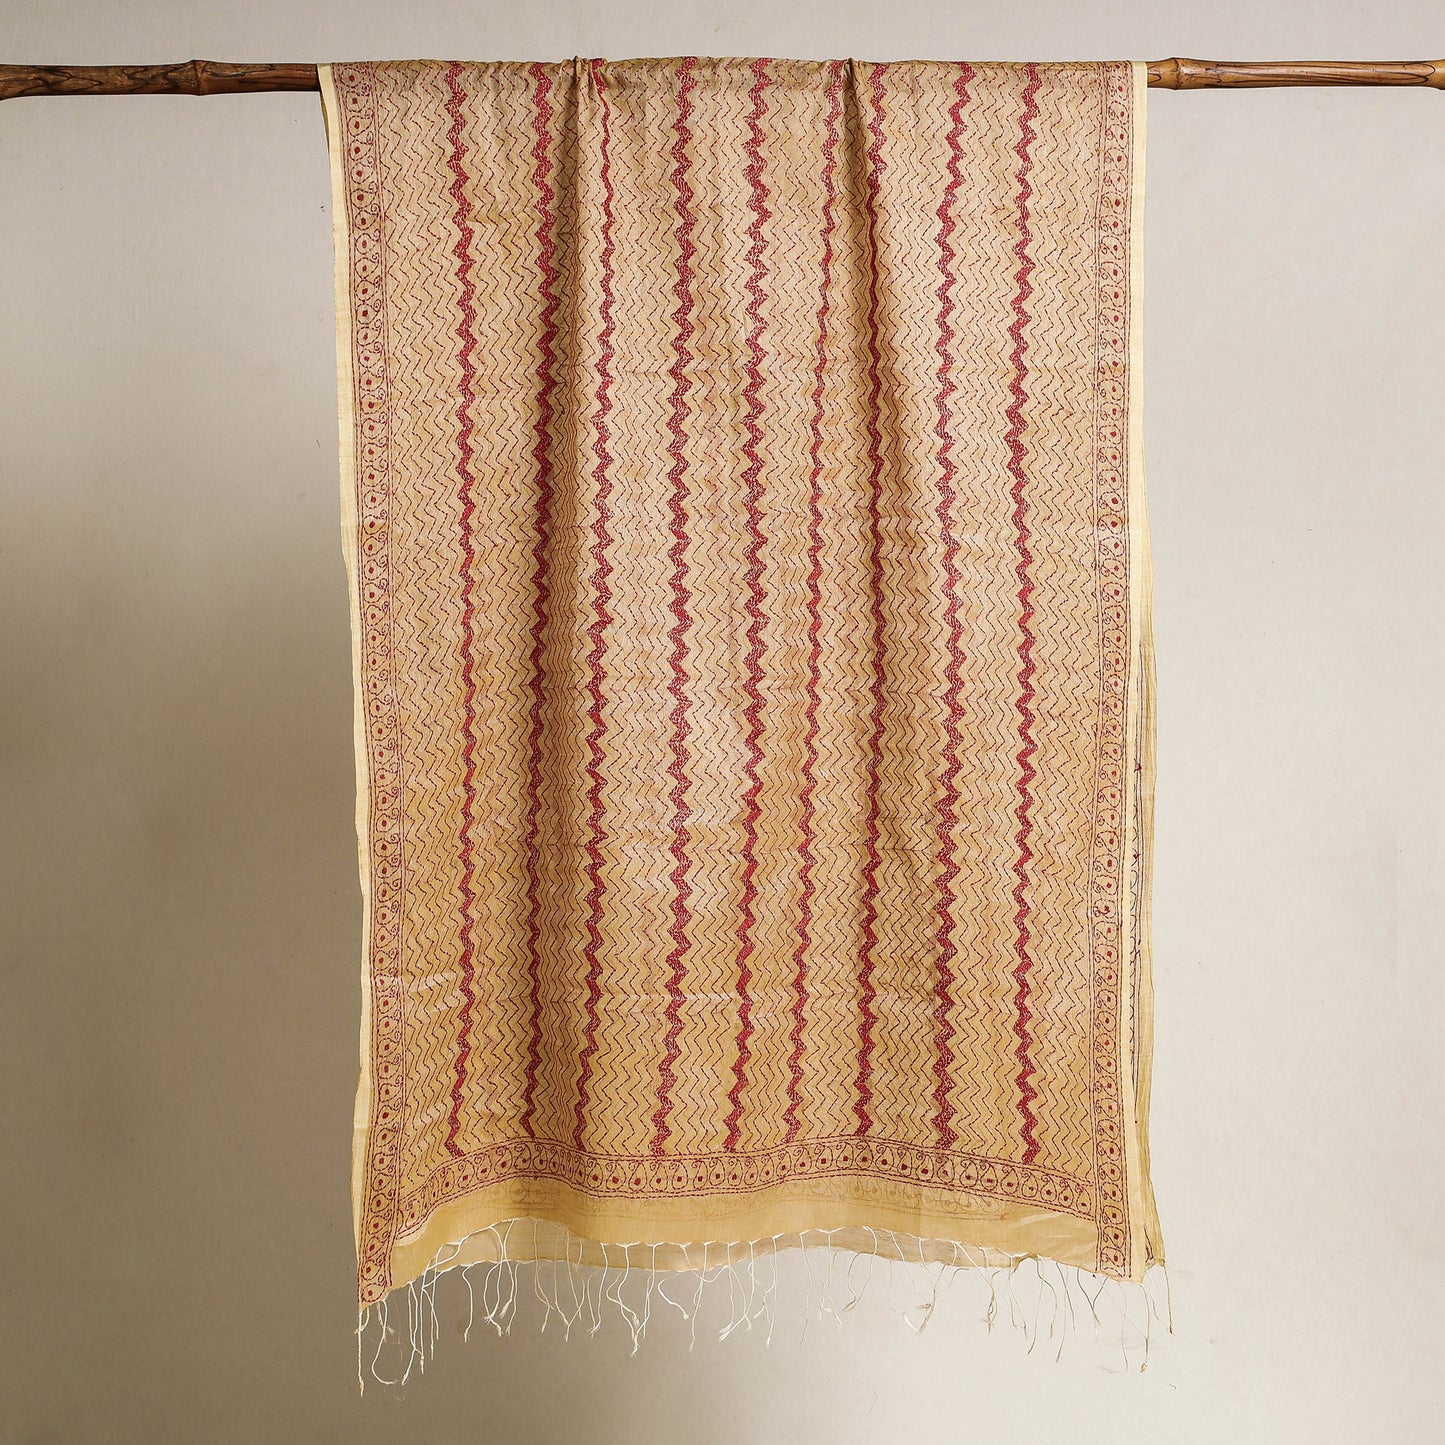 Beige - Bengal Kantha Embroidery Tussar Silk Cotton Handloom Dupatta with Tassels 23